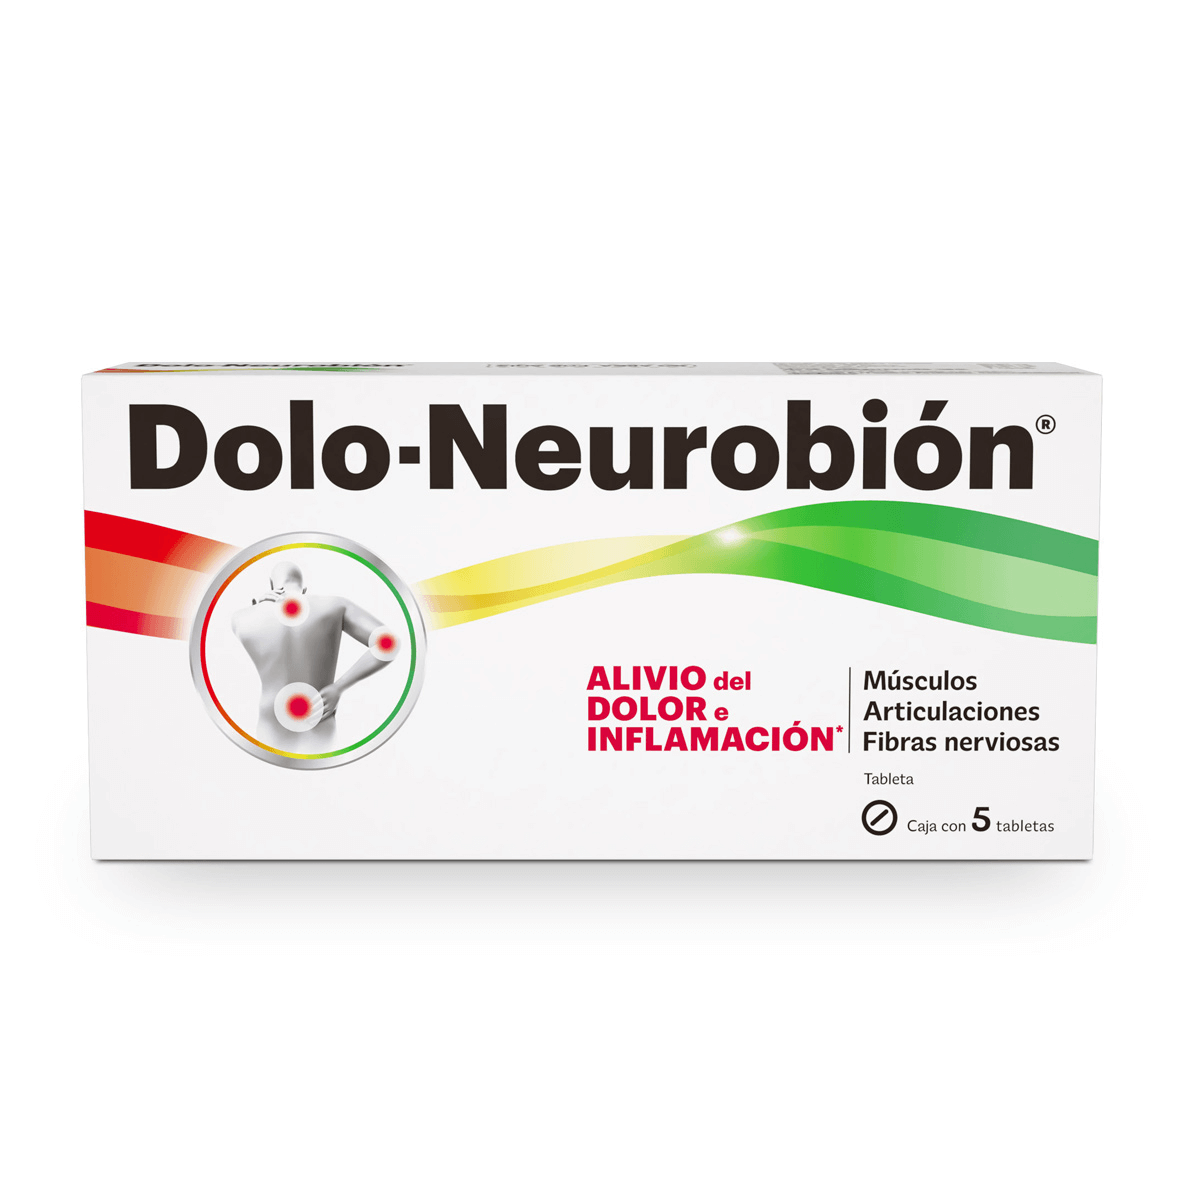 Caja de producto Dolo Neurobion